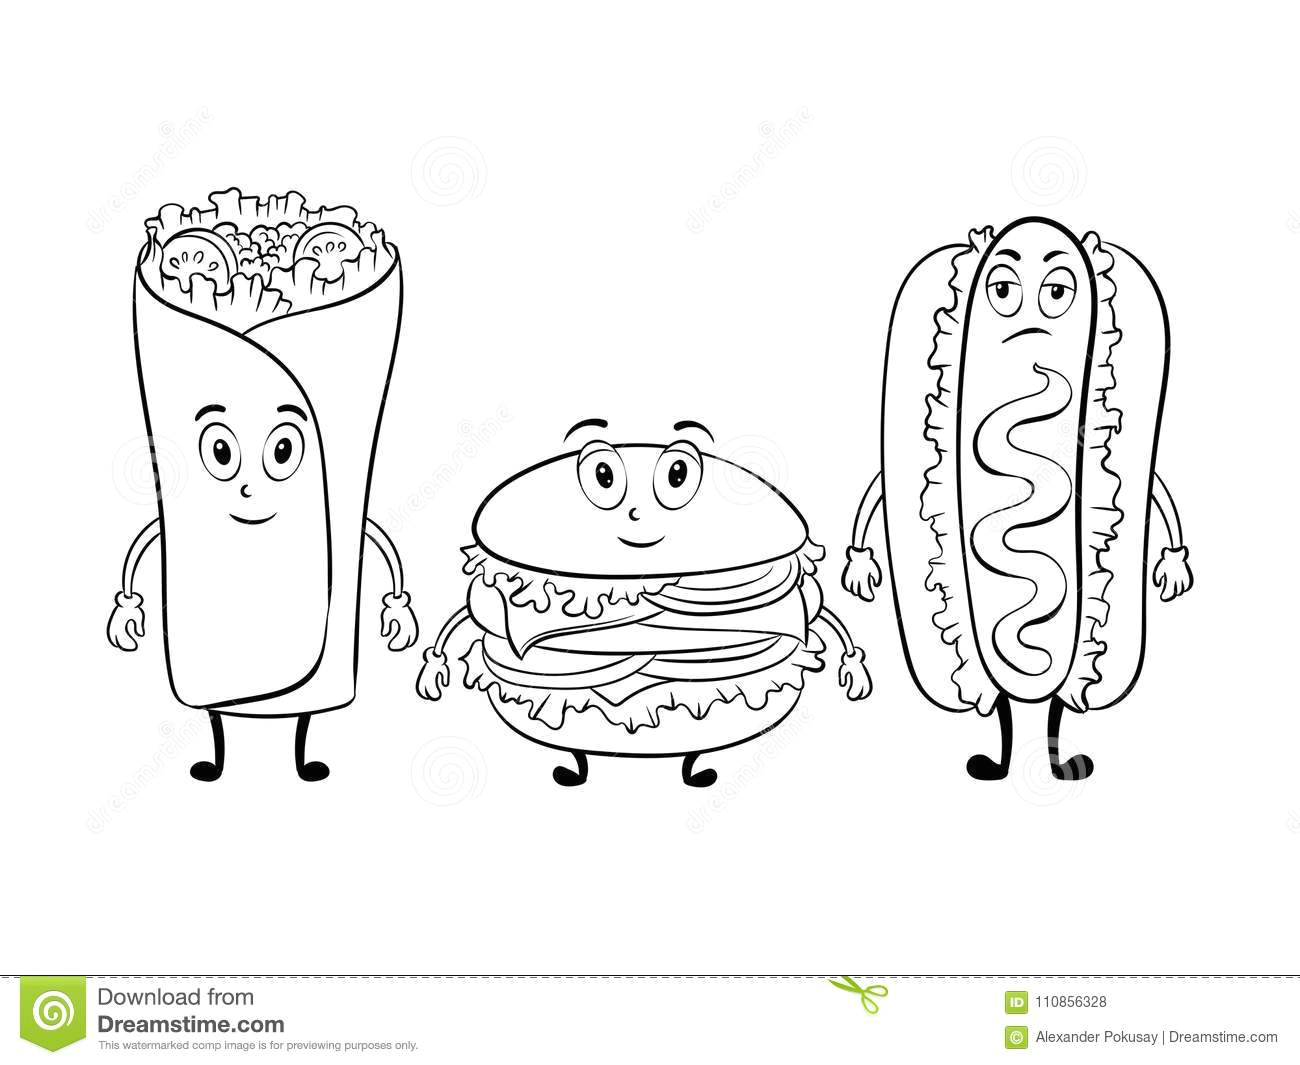 burger hot dog and burrito cartoon character coloring vector illustration cartoon food character comic book style imitation